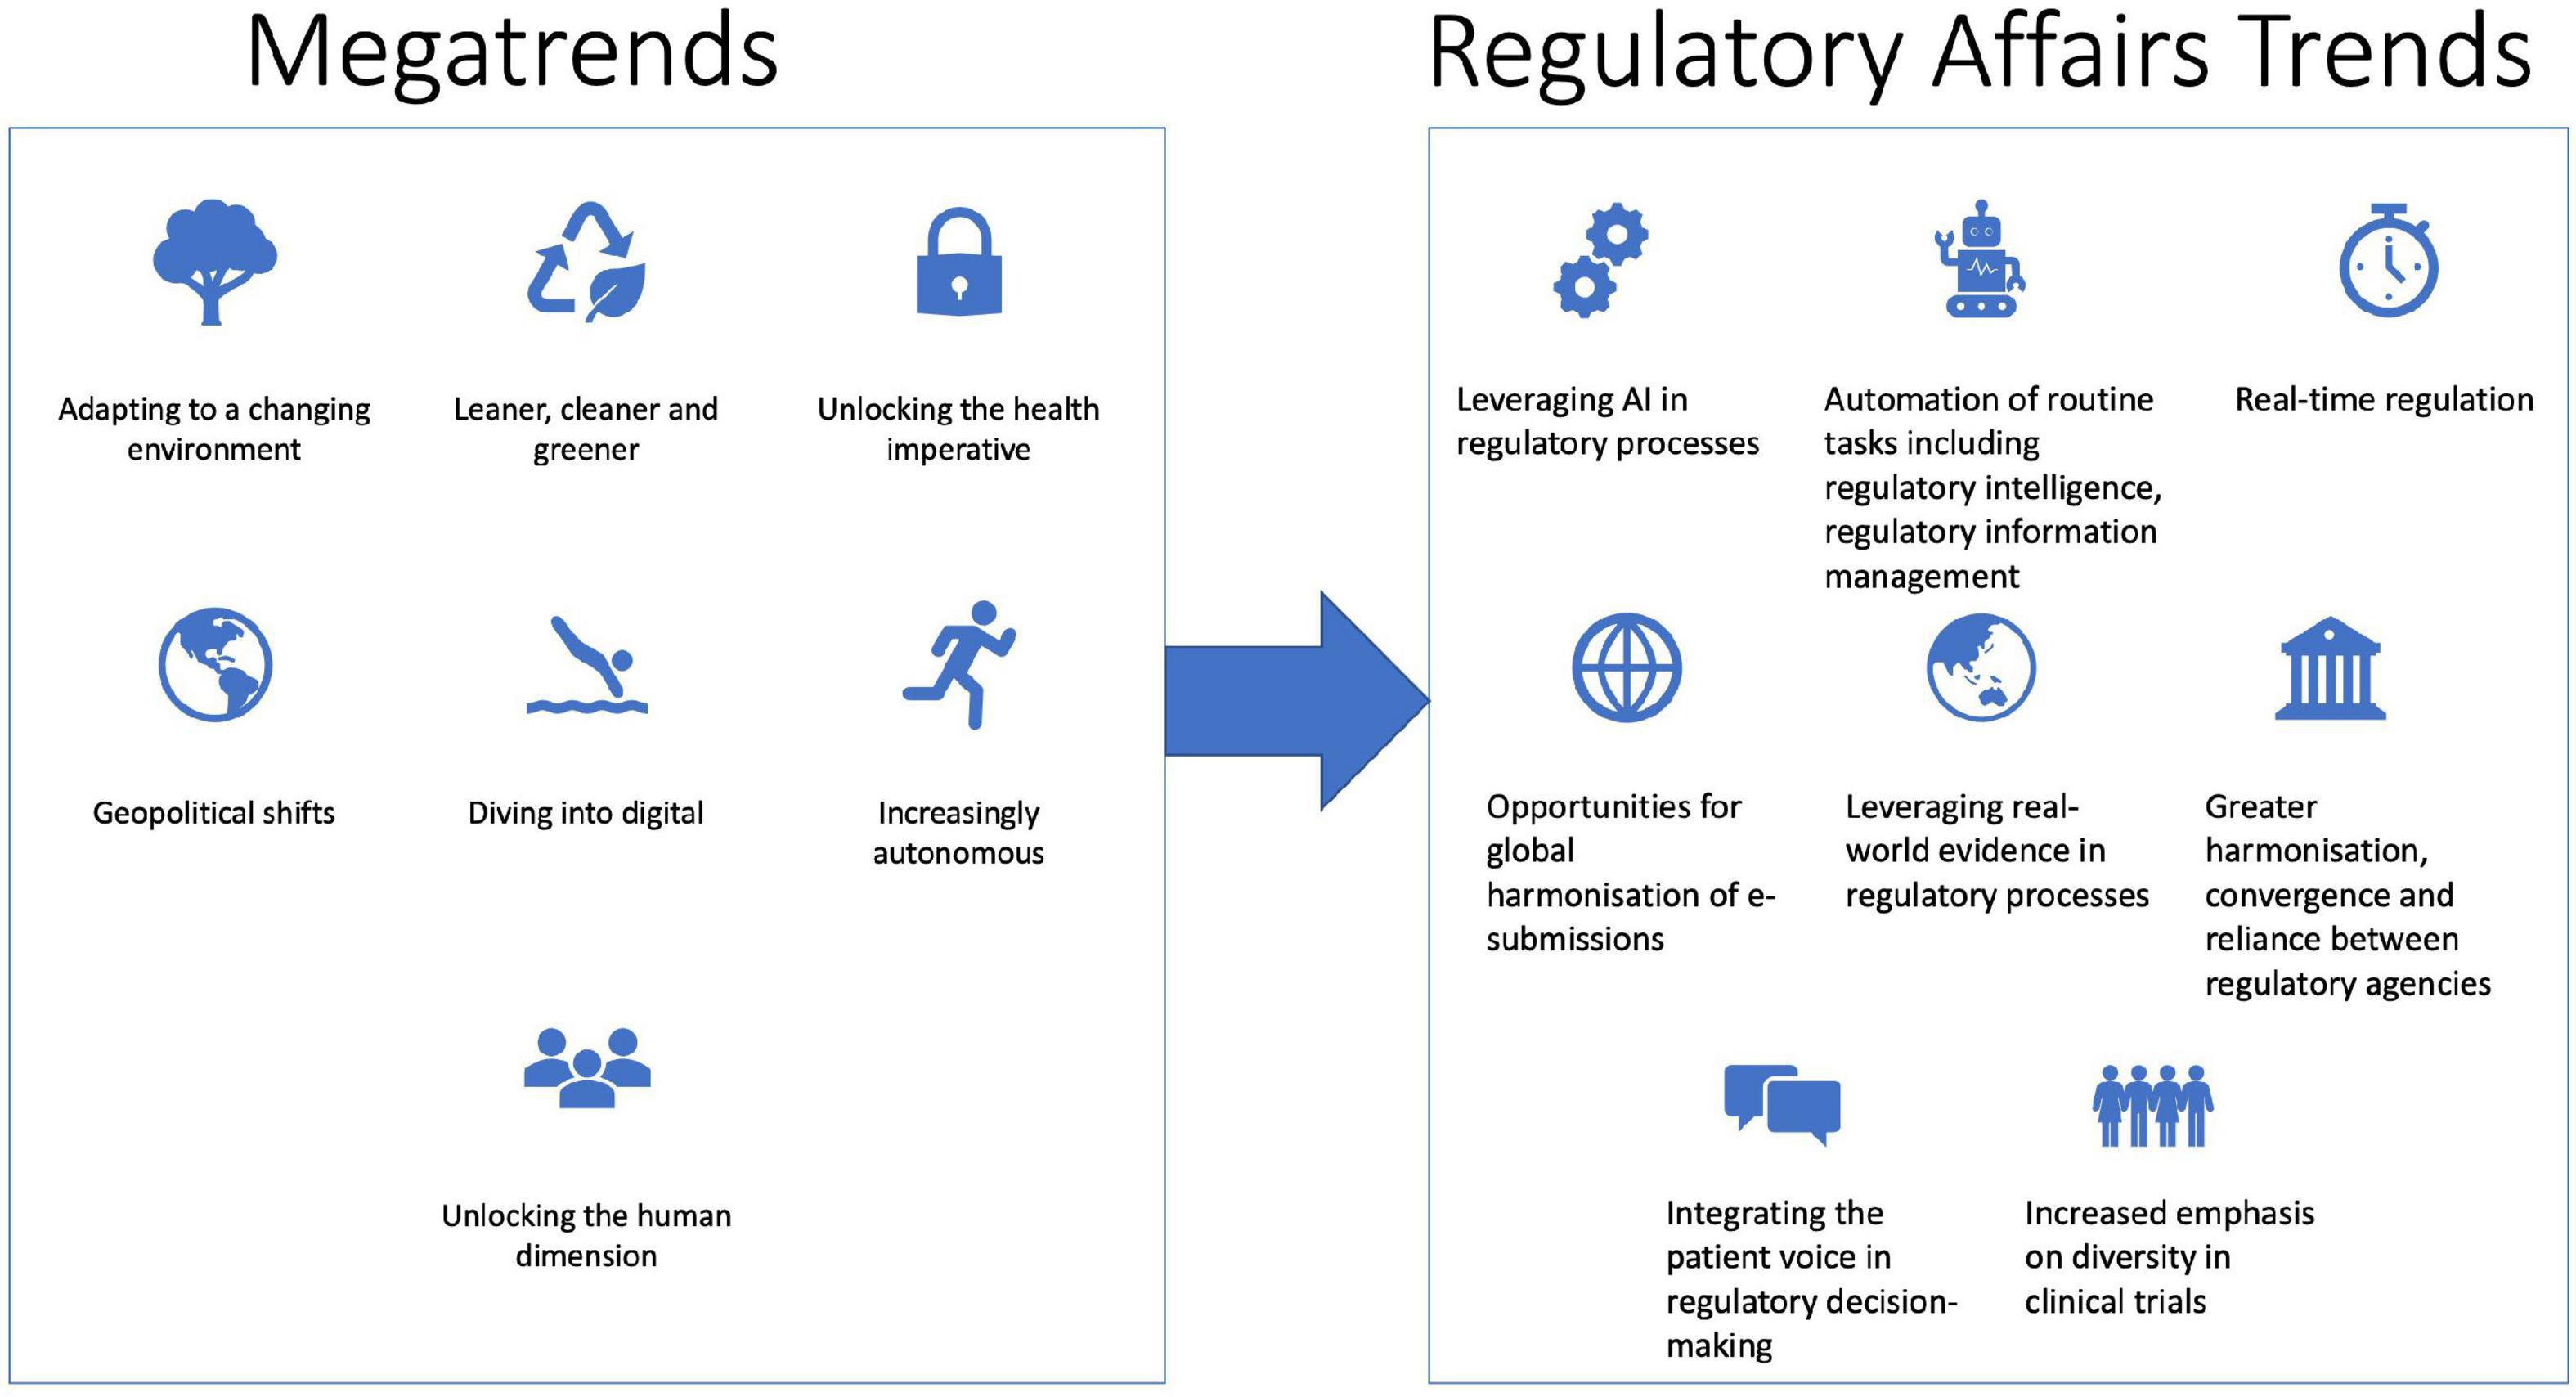 Future directions in regulatory affairs